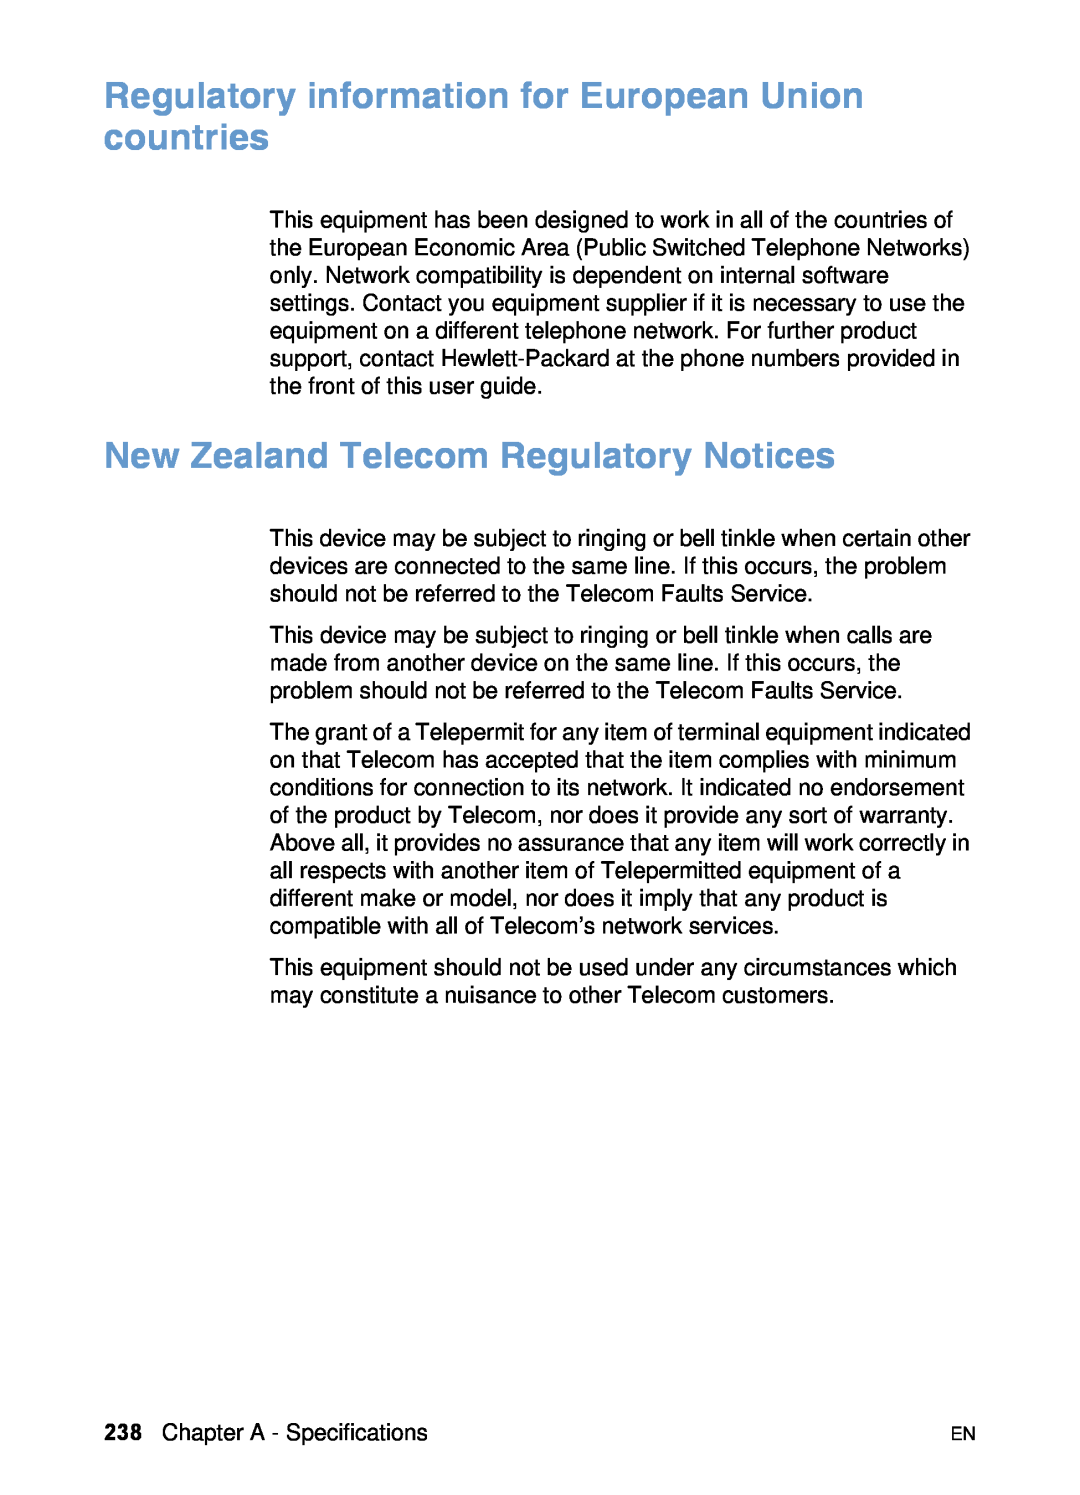 HP 3200 manual Regulatory information for European Union countries, New Zealand Telecom Regulatory Notices 